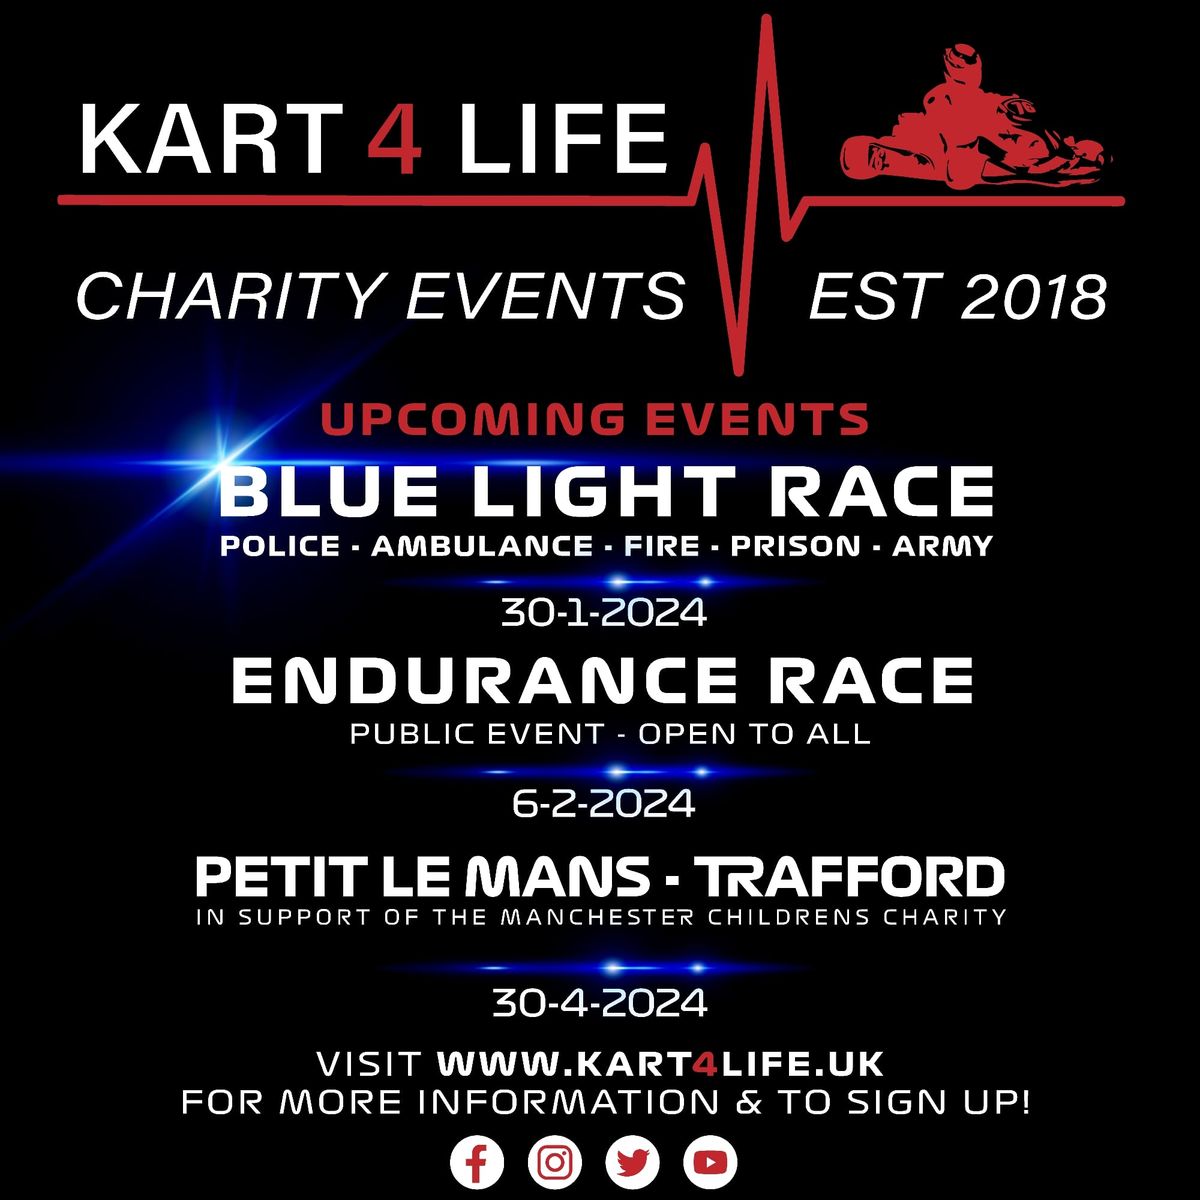 KART4LIFE - Petit Le Mans: TRAFFORD 